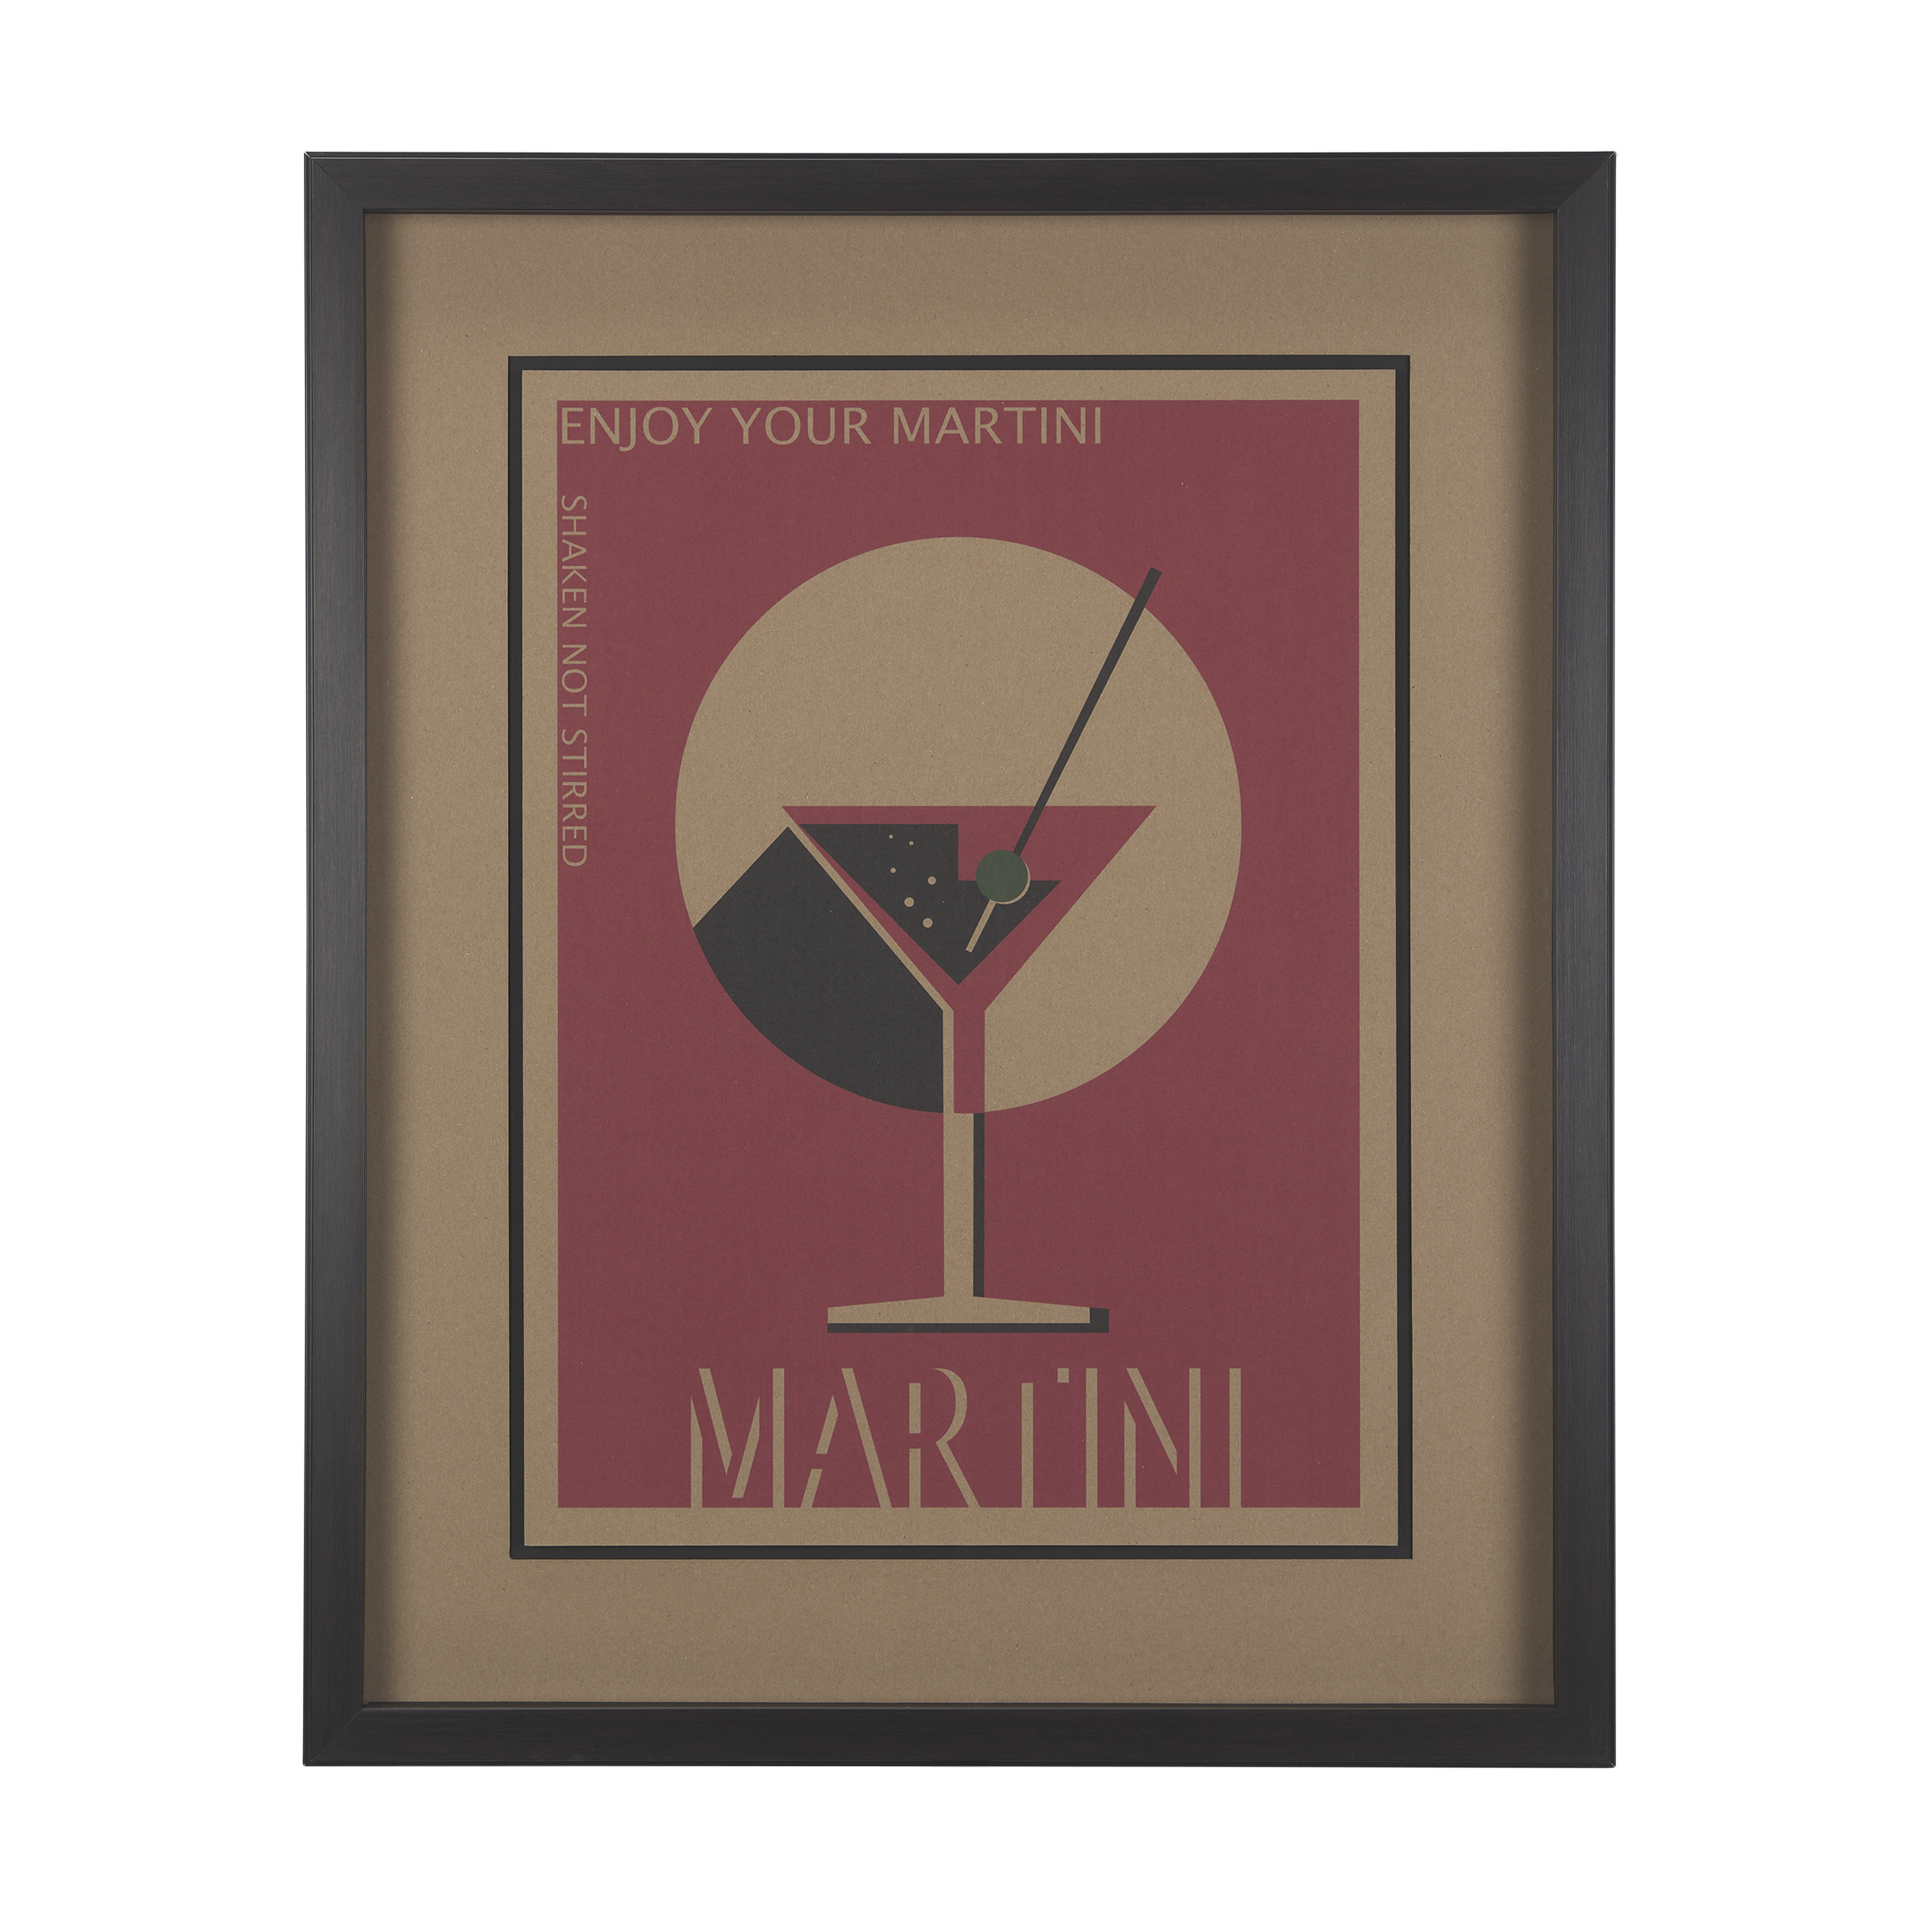 Martini (25 x 31)